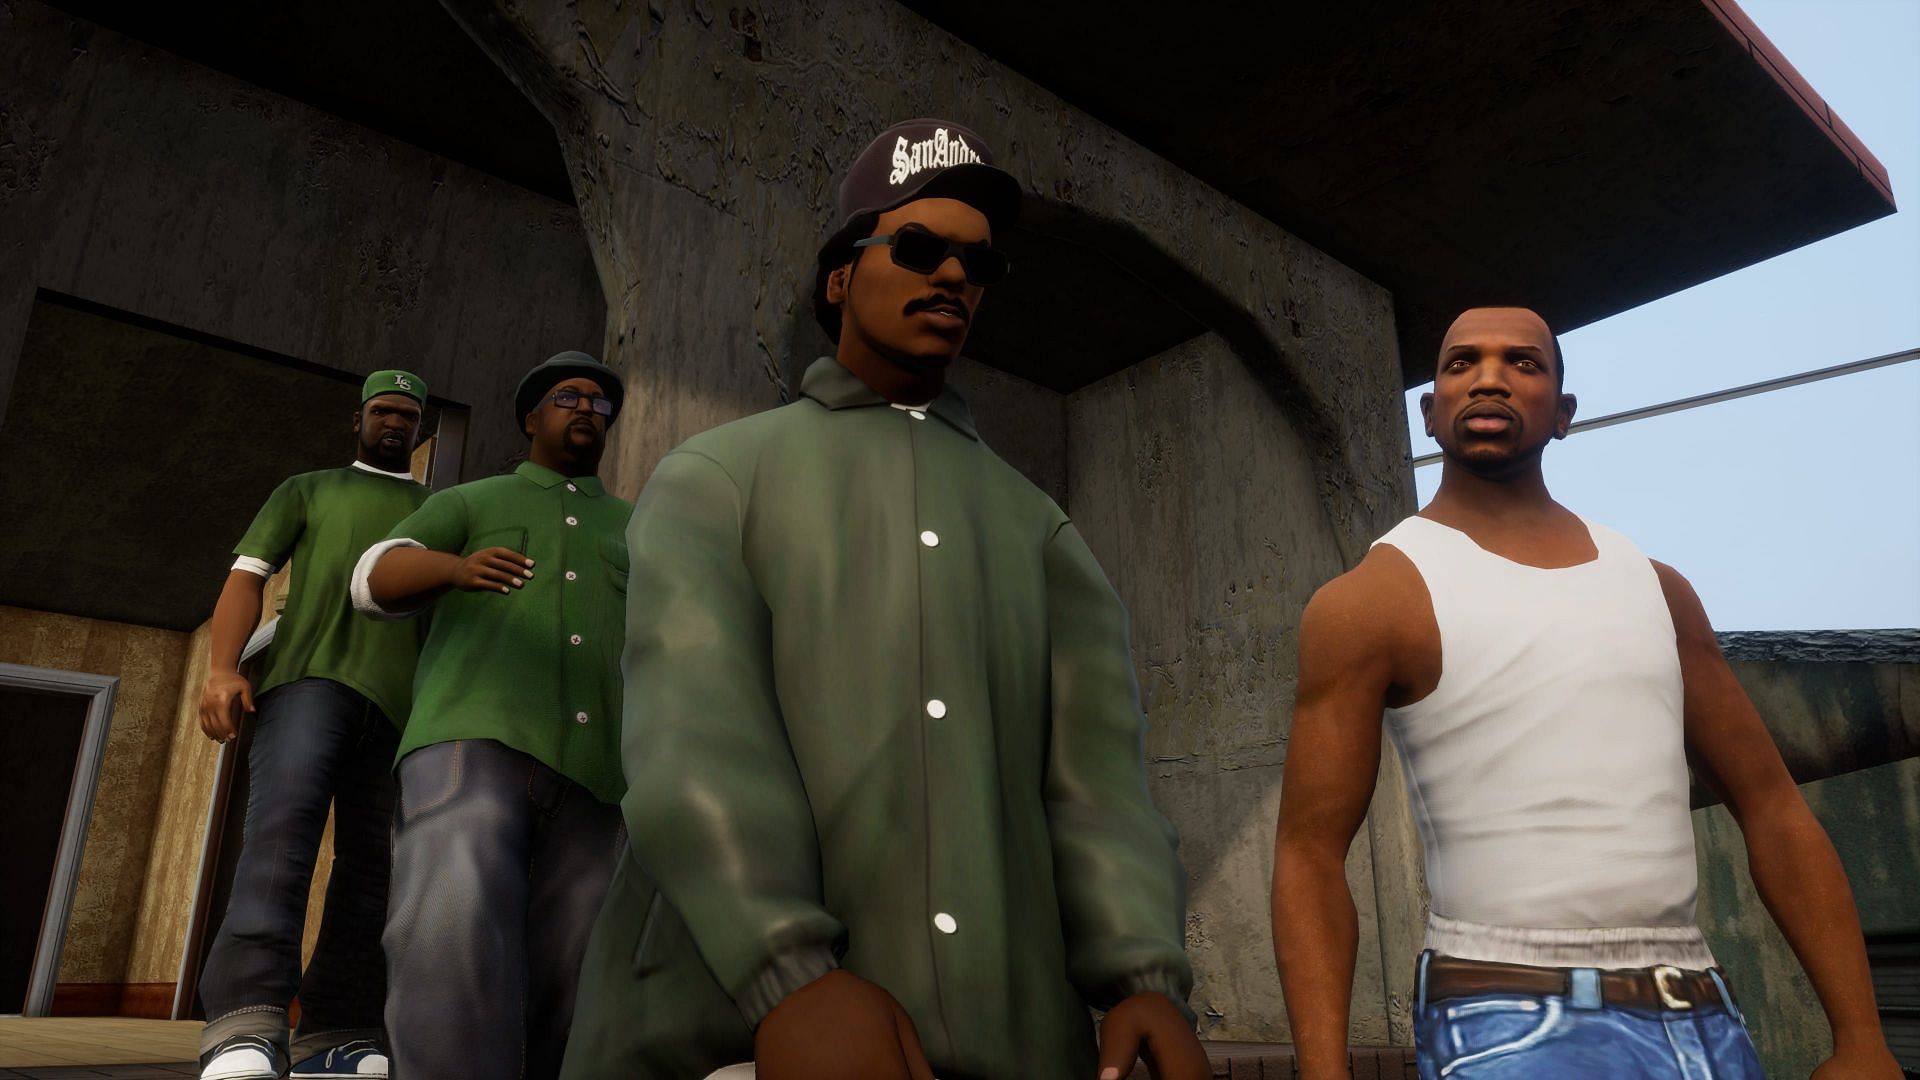 Big Smoke, as he appears with some GSF members (Image via Rockstar Games)